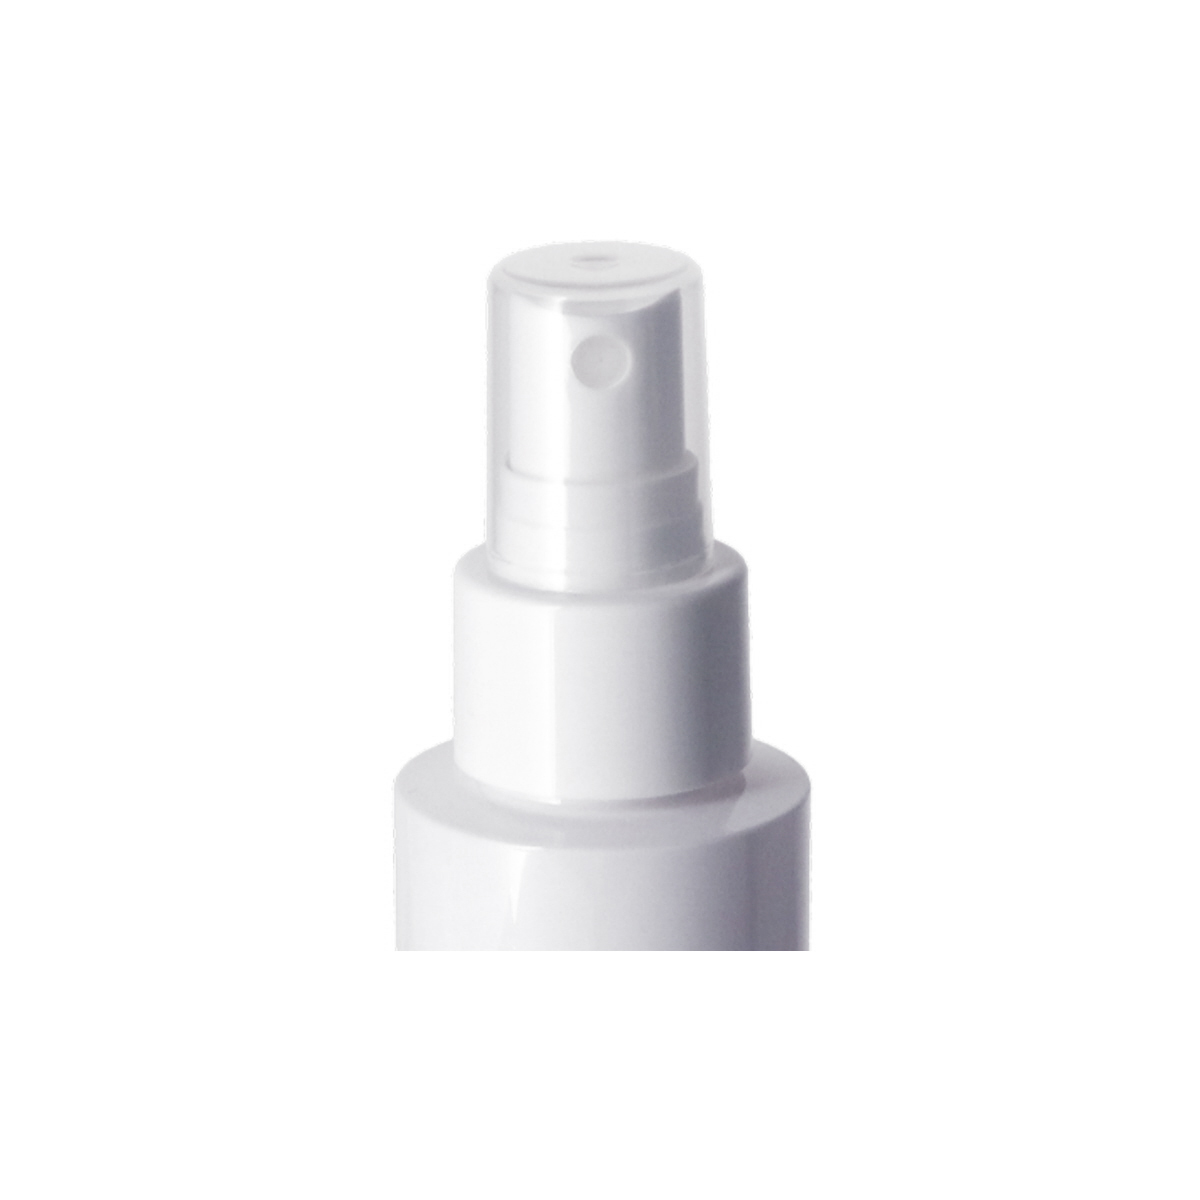 Sprayer Pumps,＞0.2cc,Sprayer Pumps,Thick liquid,hairspray,facial skin care